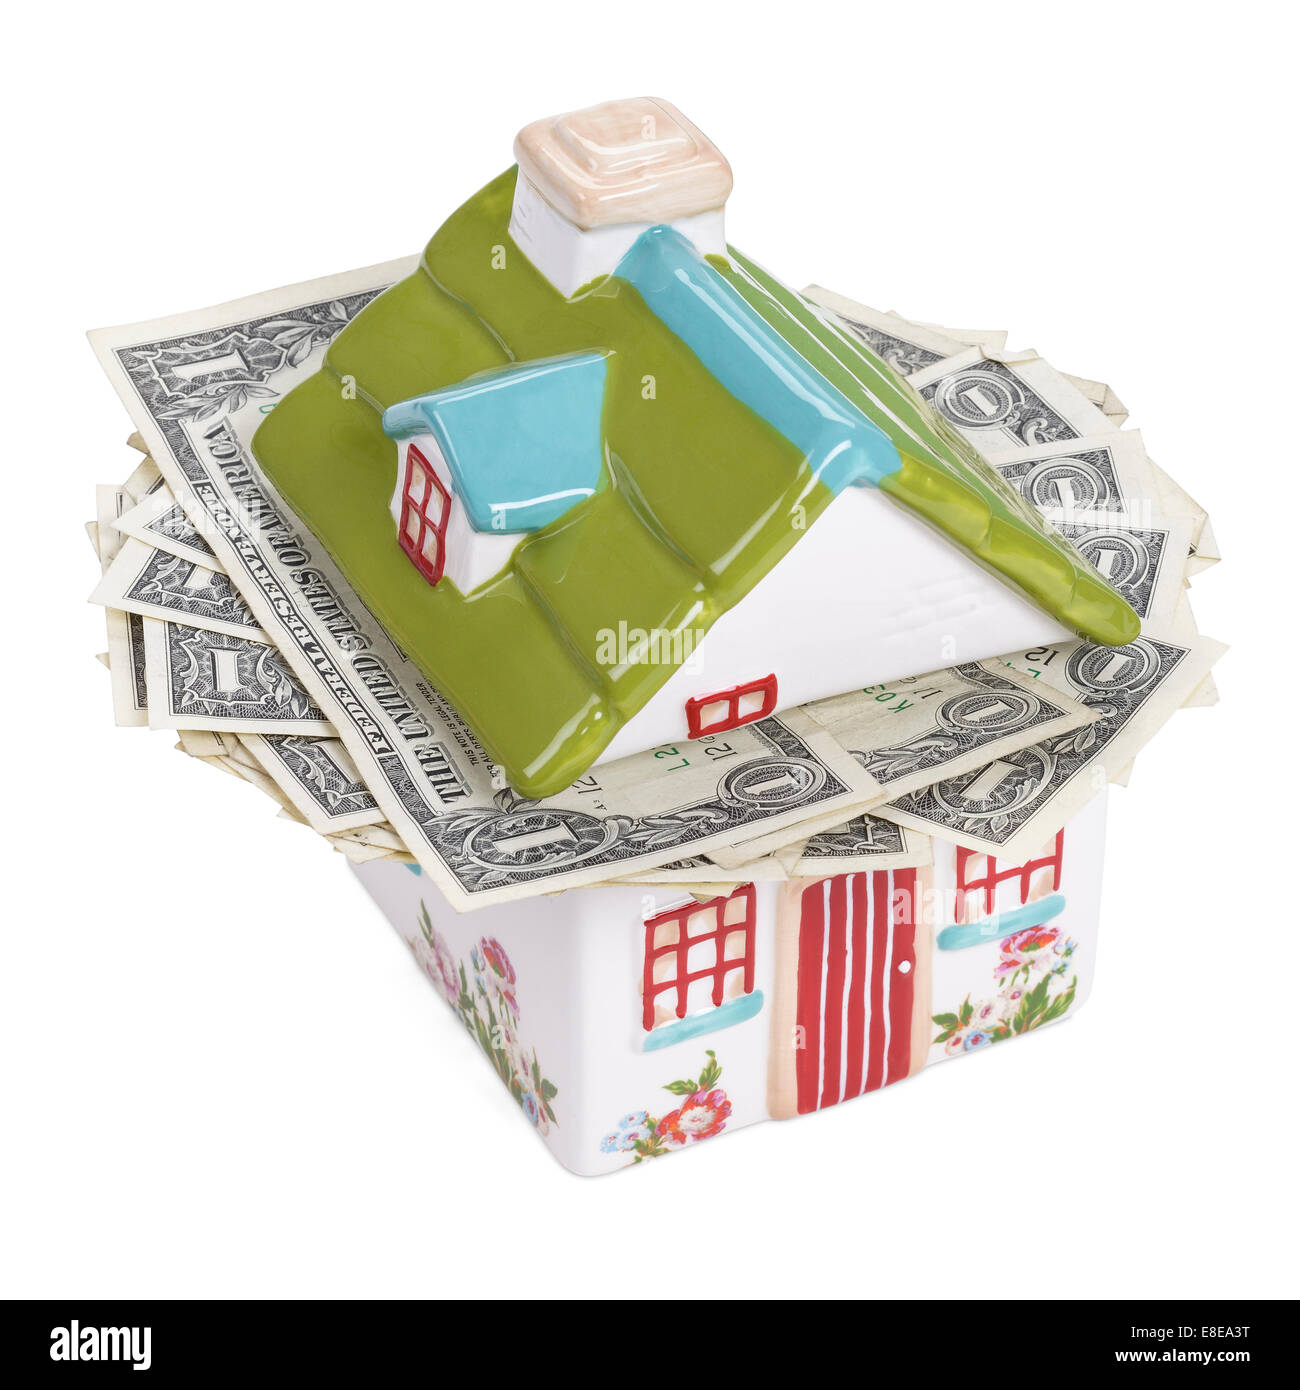 House shaped money box stuffed with cash Stock Photo